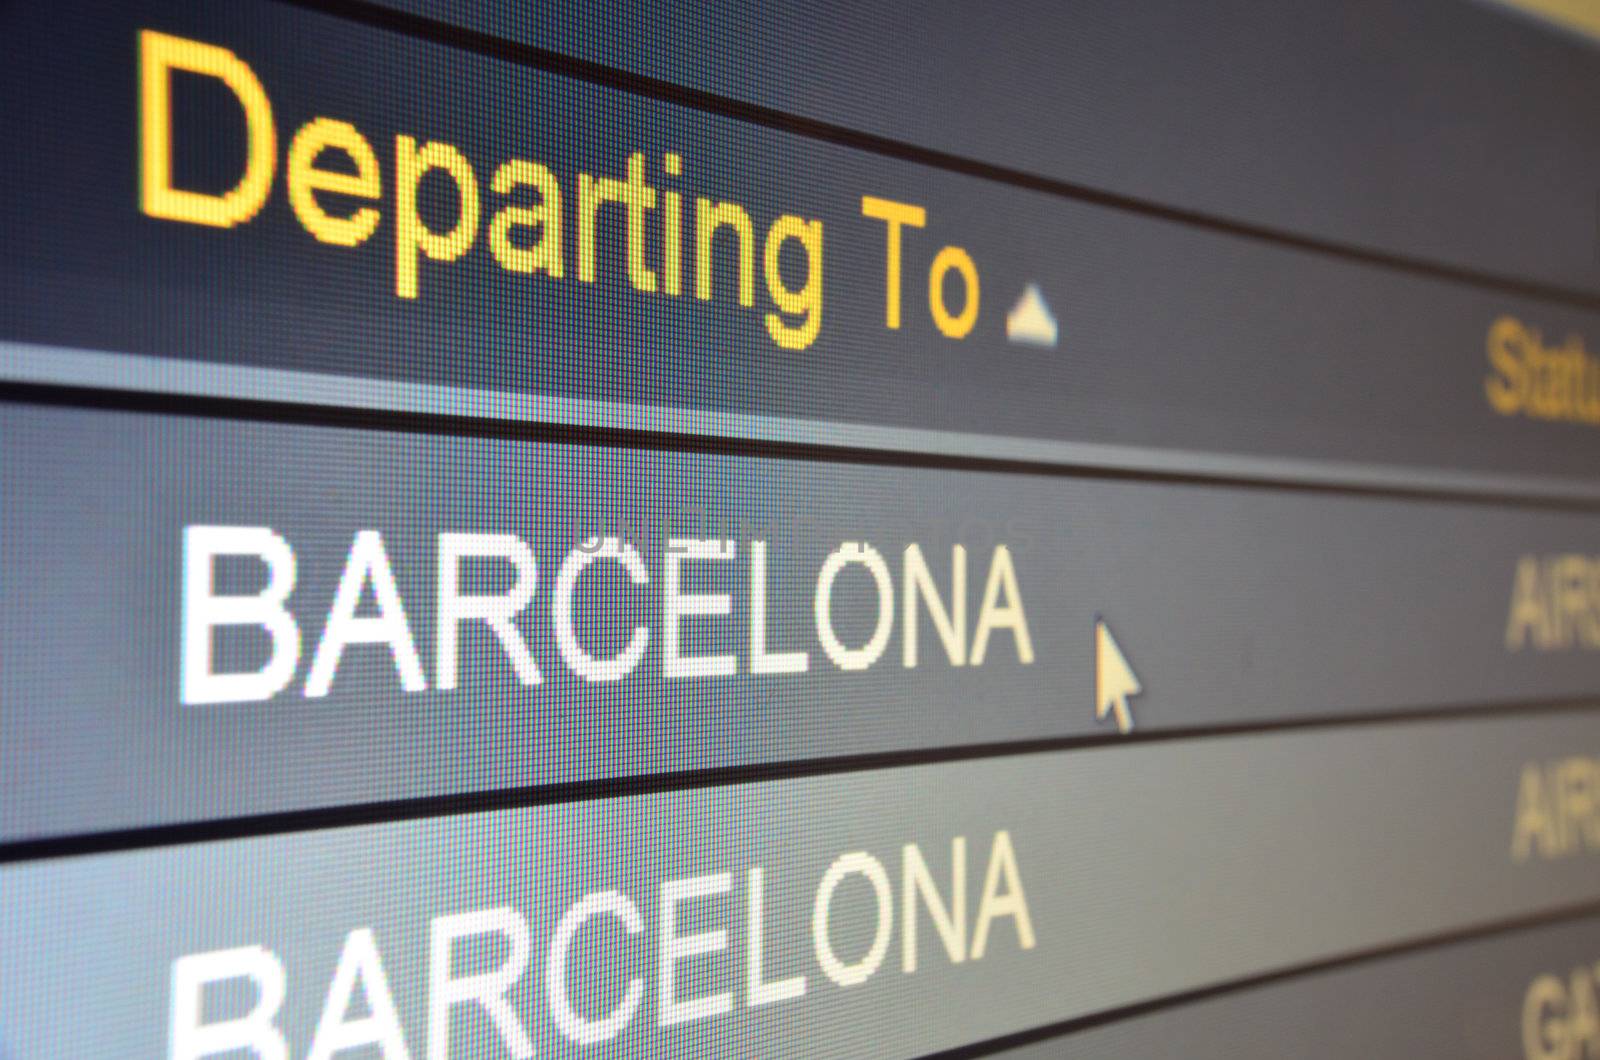 Flight departing to Barcelona by artofphoto